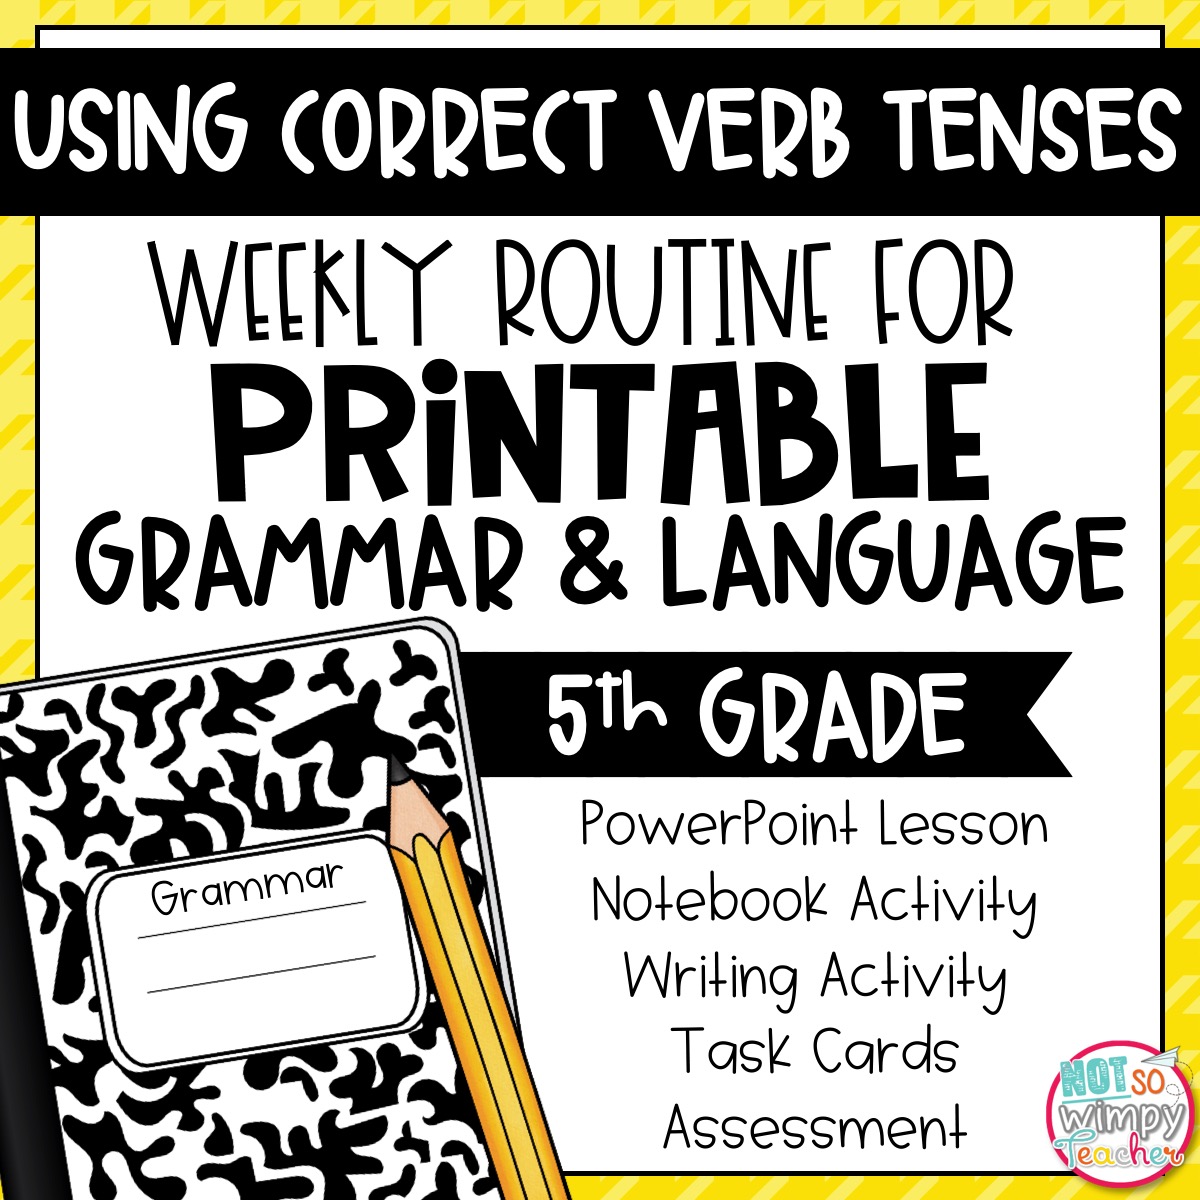 grammar-fifth-grade-activities-using-correct-verb-tenses-not-so